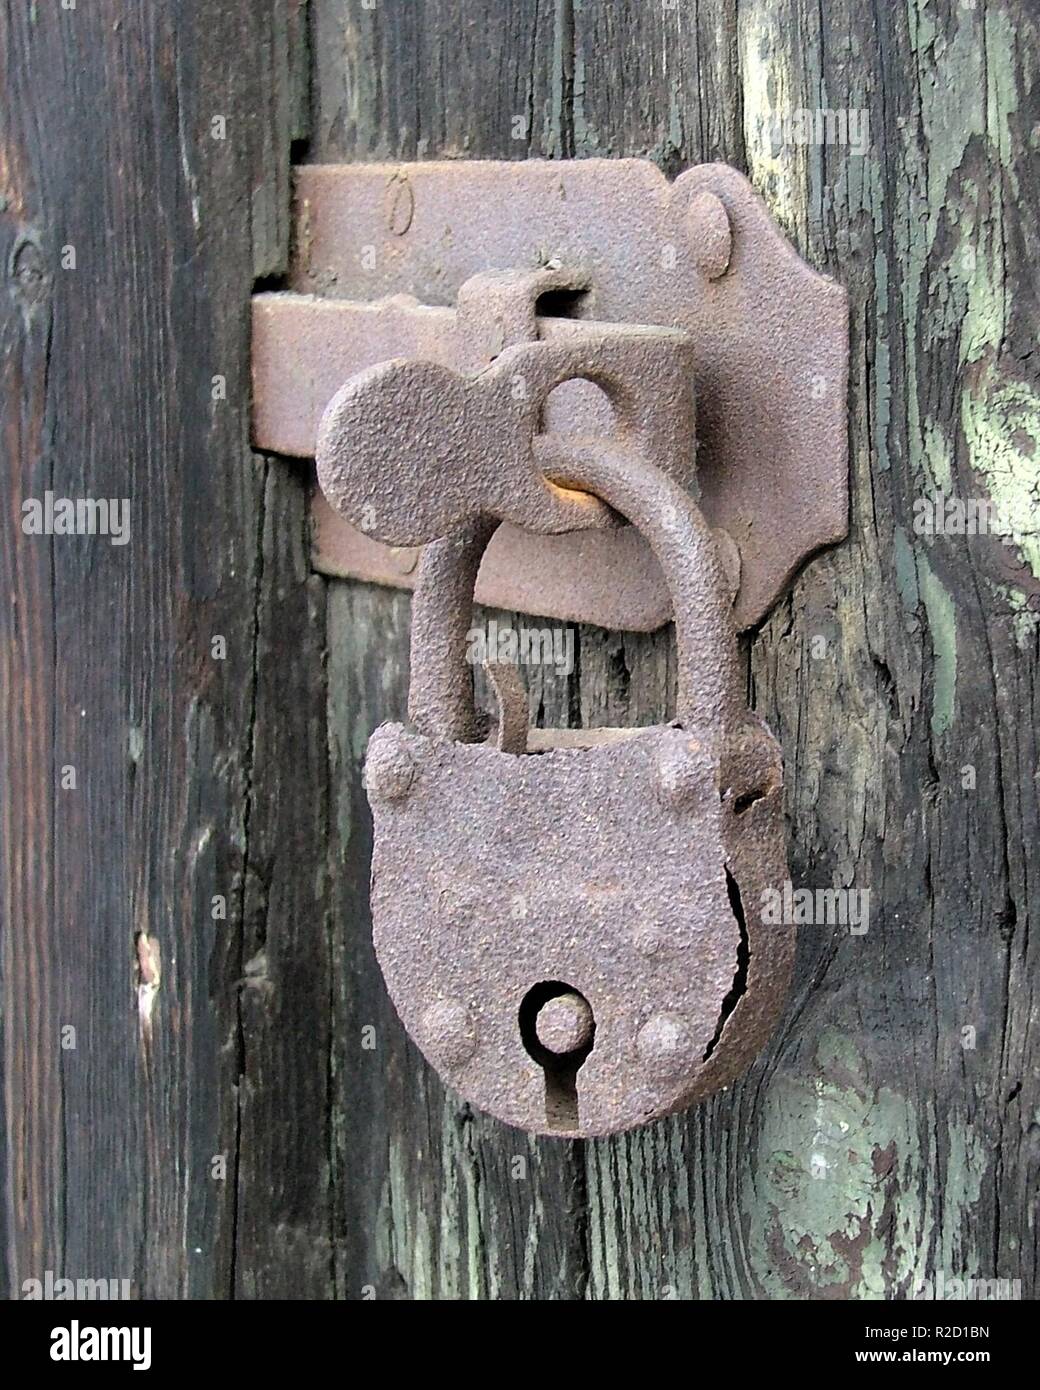 locked Stock Photo